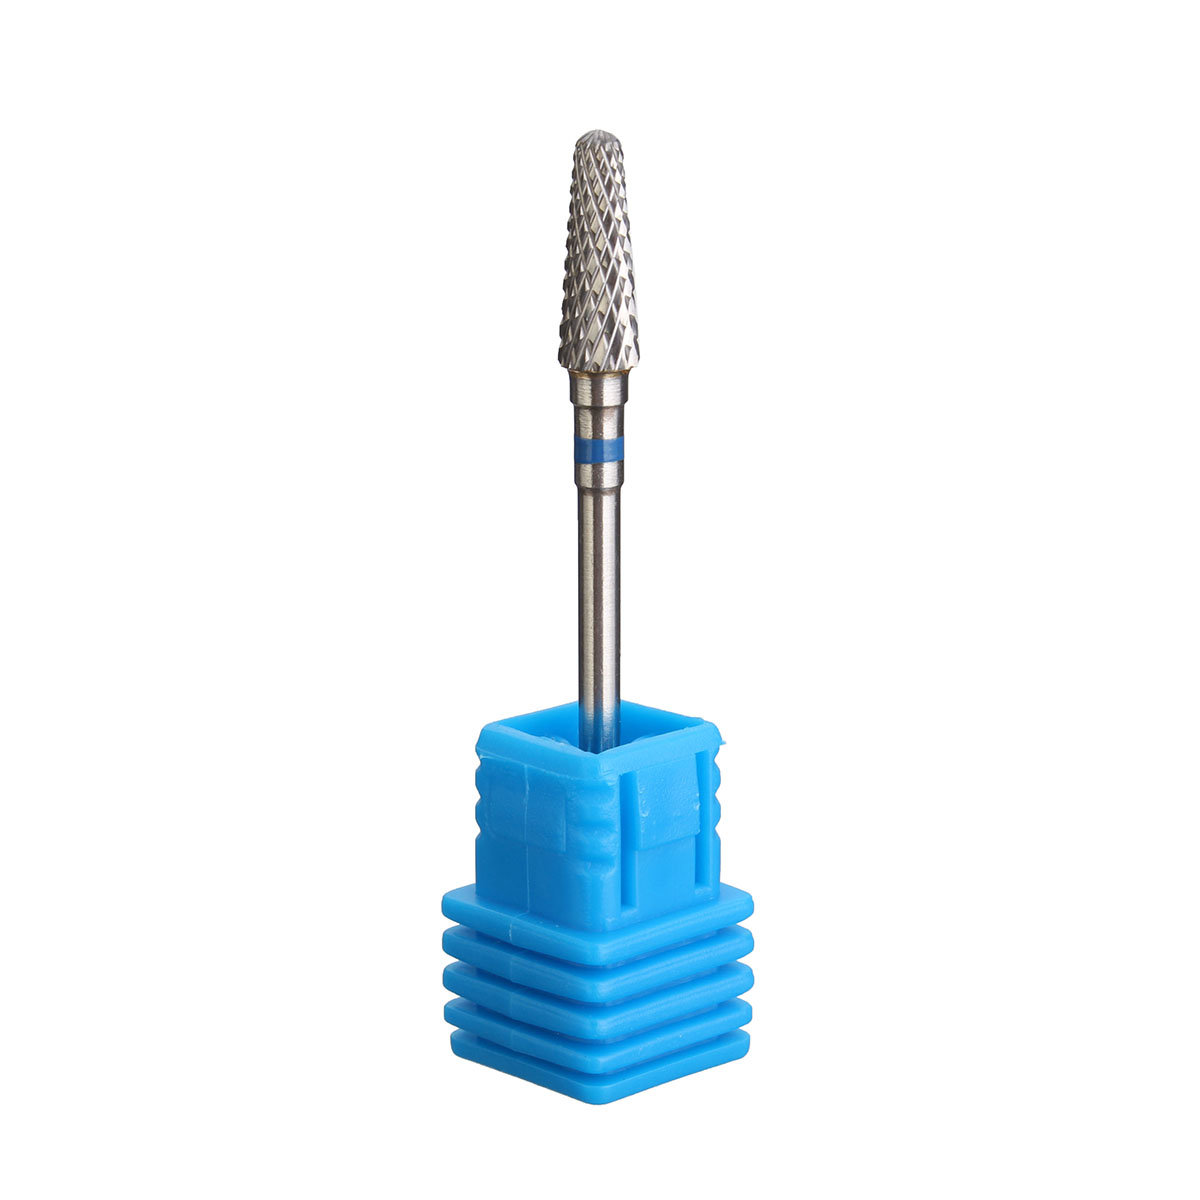 Carbide-Cylinder-Electric-Nail-Drill-Bits-File-Cuticle-Clean-Burr-Salon-Polish-Manicure-Pedicure-1088428